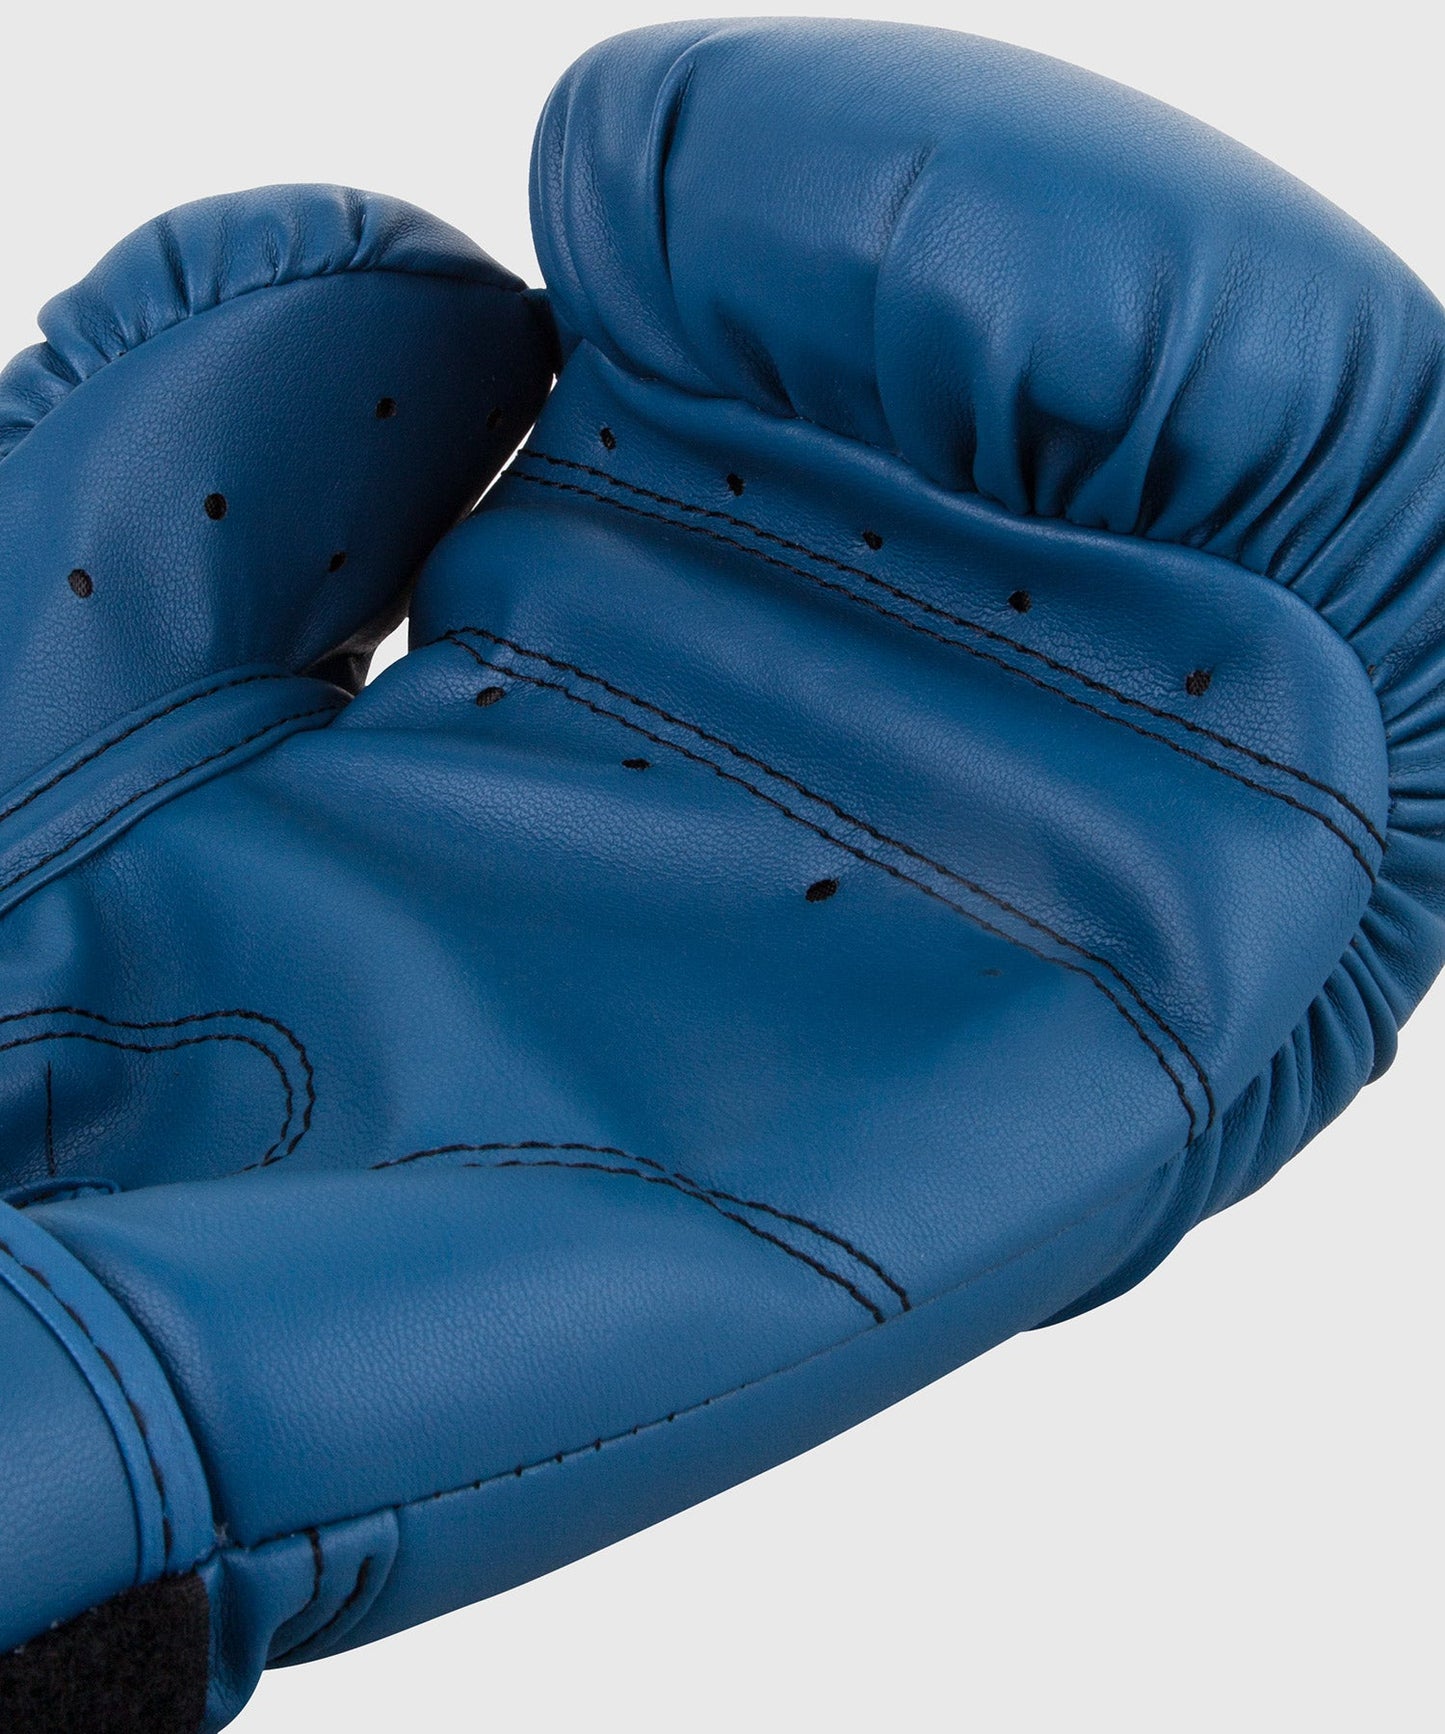 Venum Contender Boxing Gloves - Navy blue